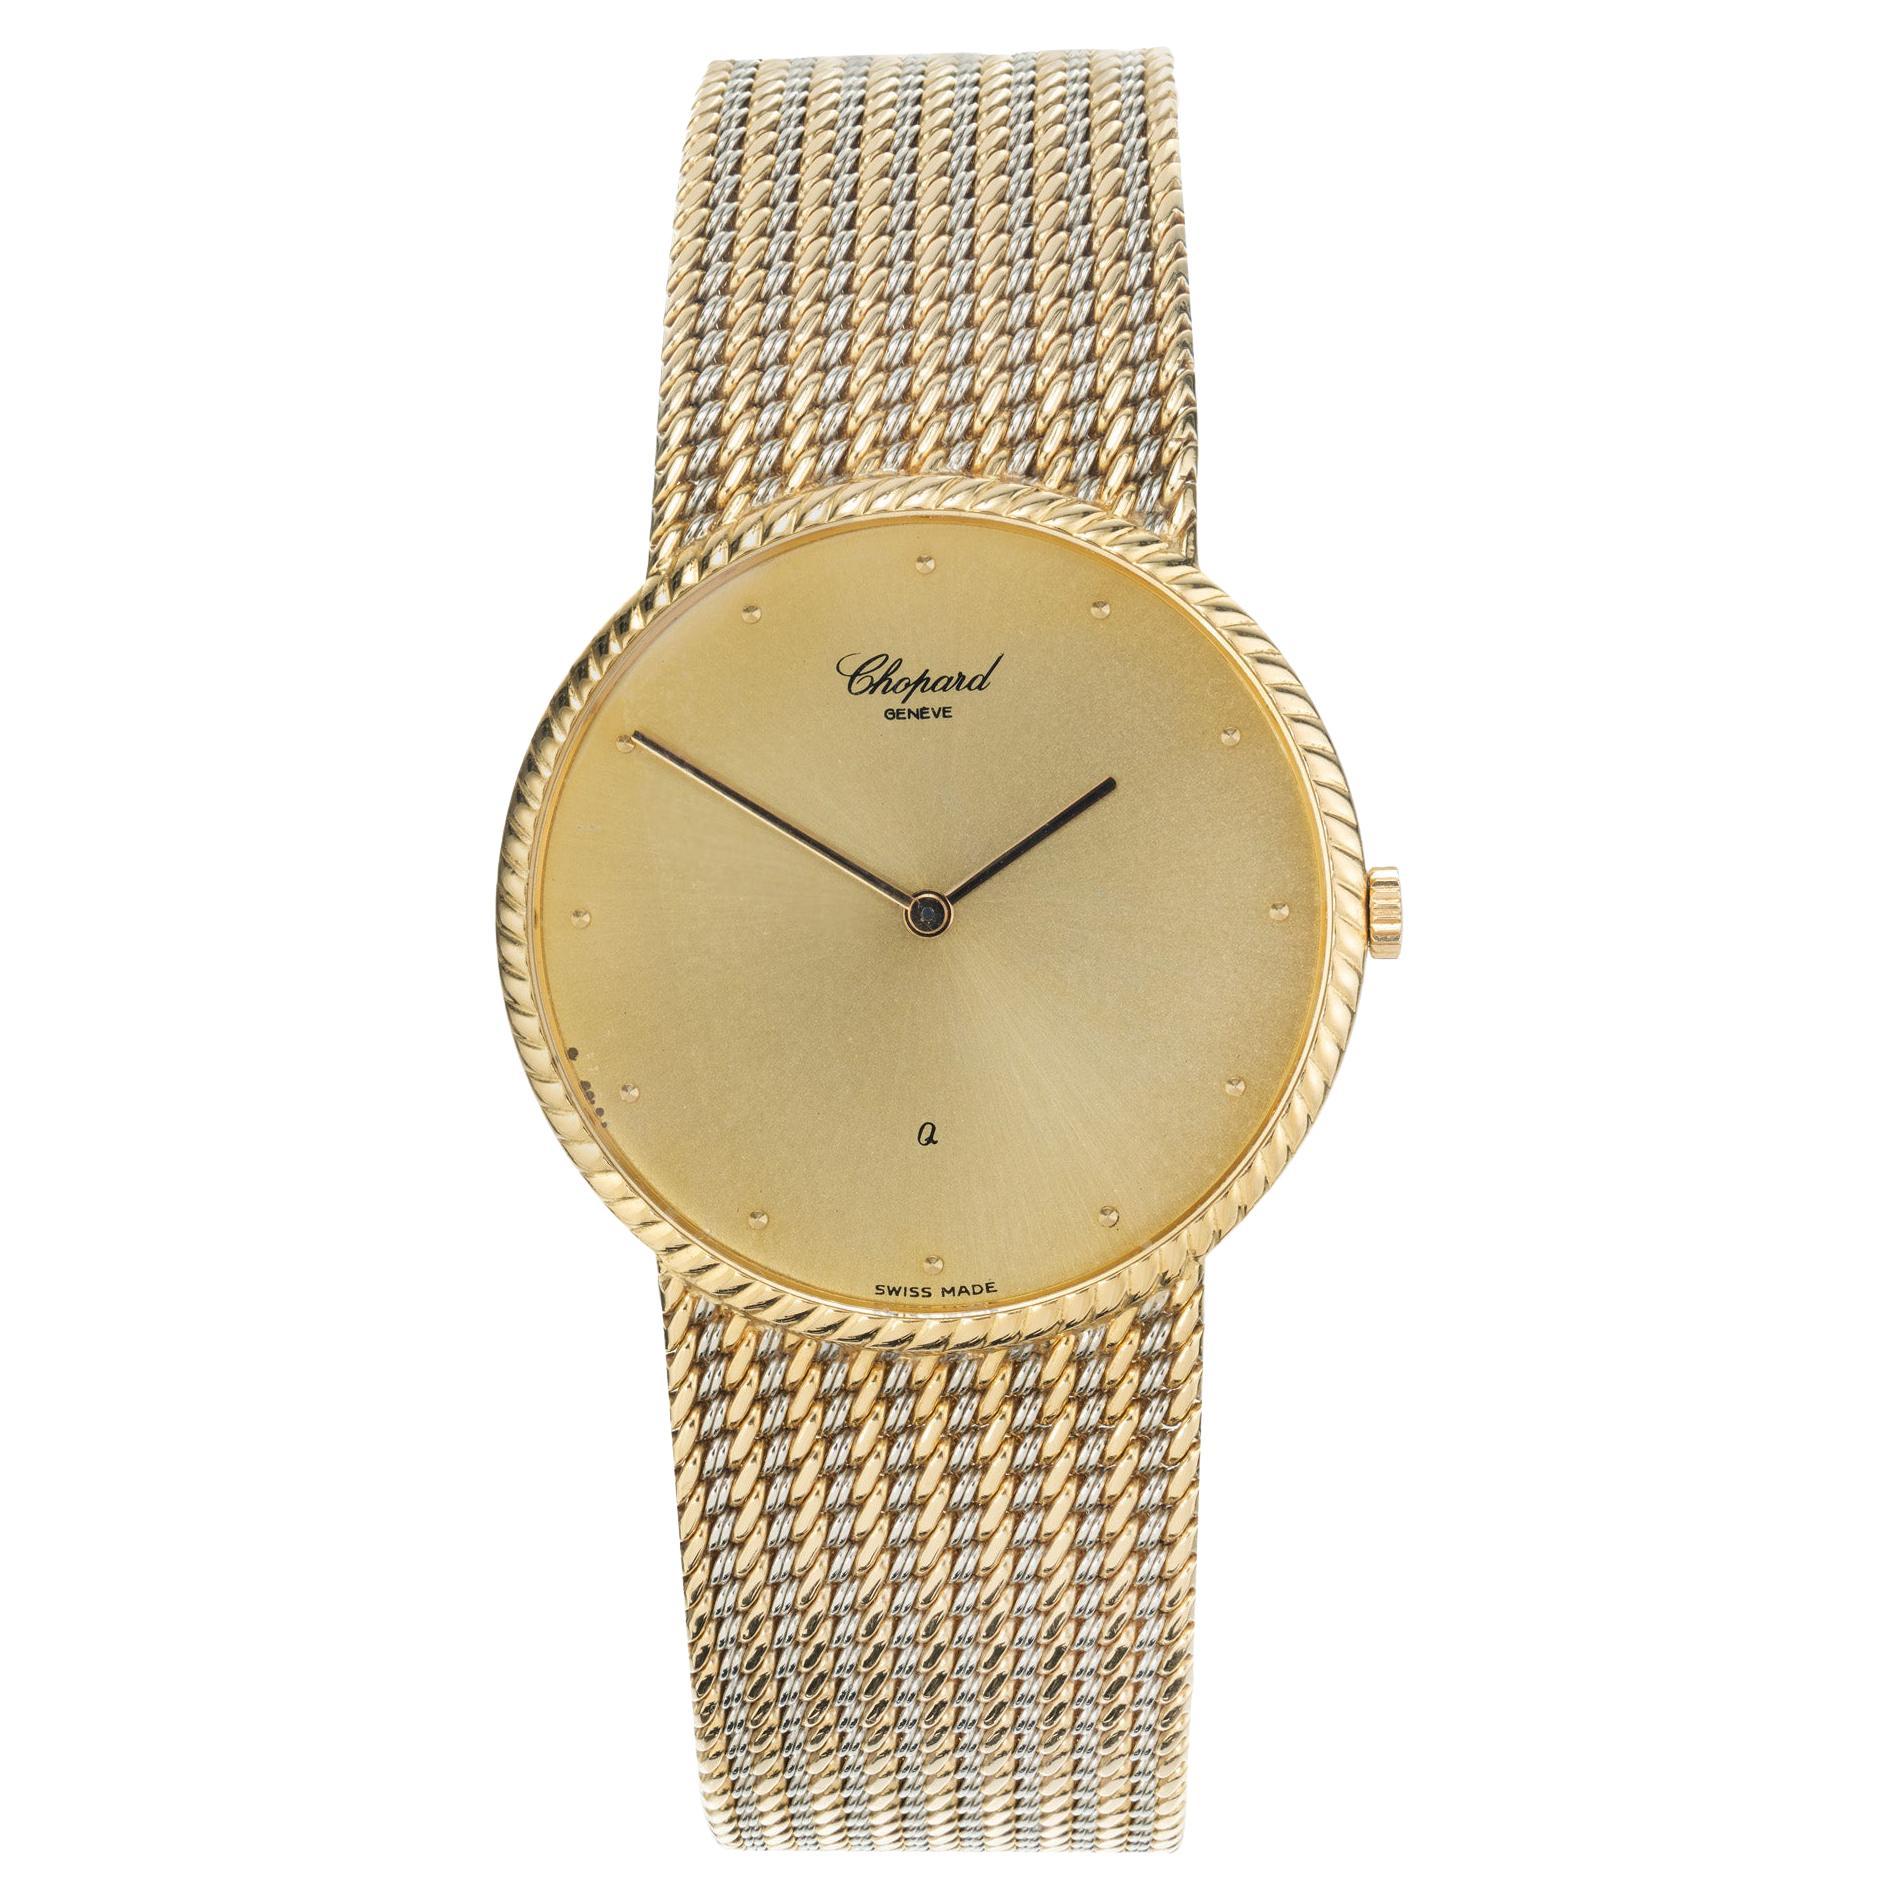 Chopard Yellow White Gold Bracelet Quartz Wristwatch